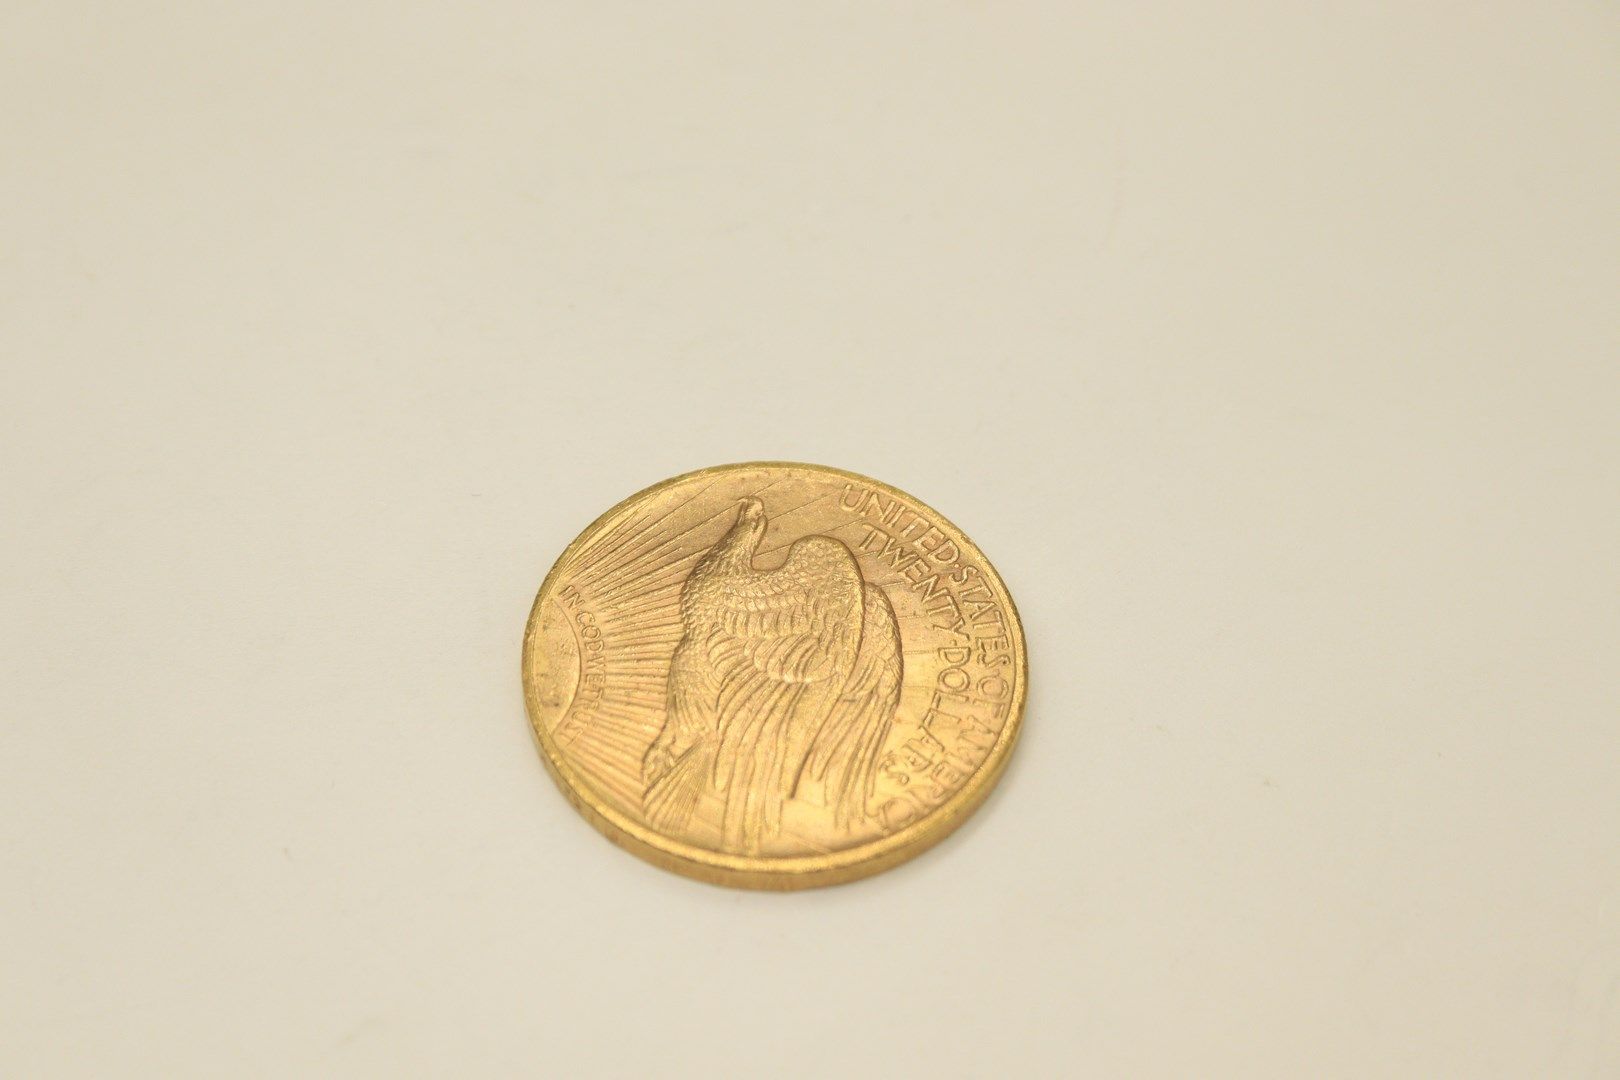 Null 20-Dollar-Goldmünze "Double Eagle" (1923).
Gewicht: 33,30 g.